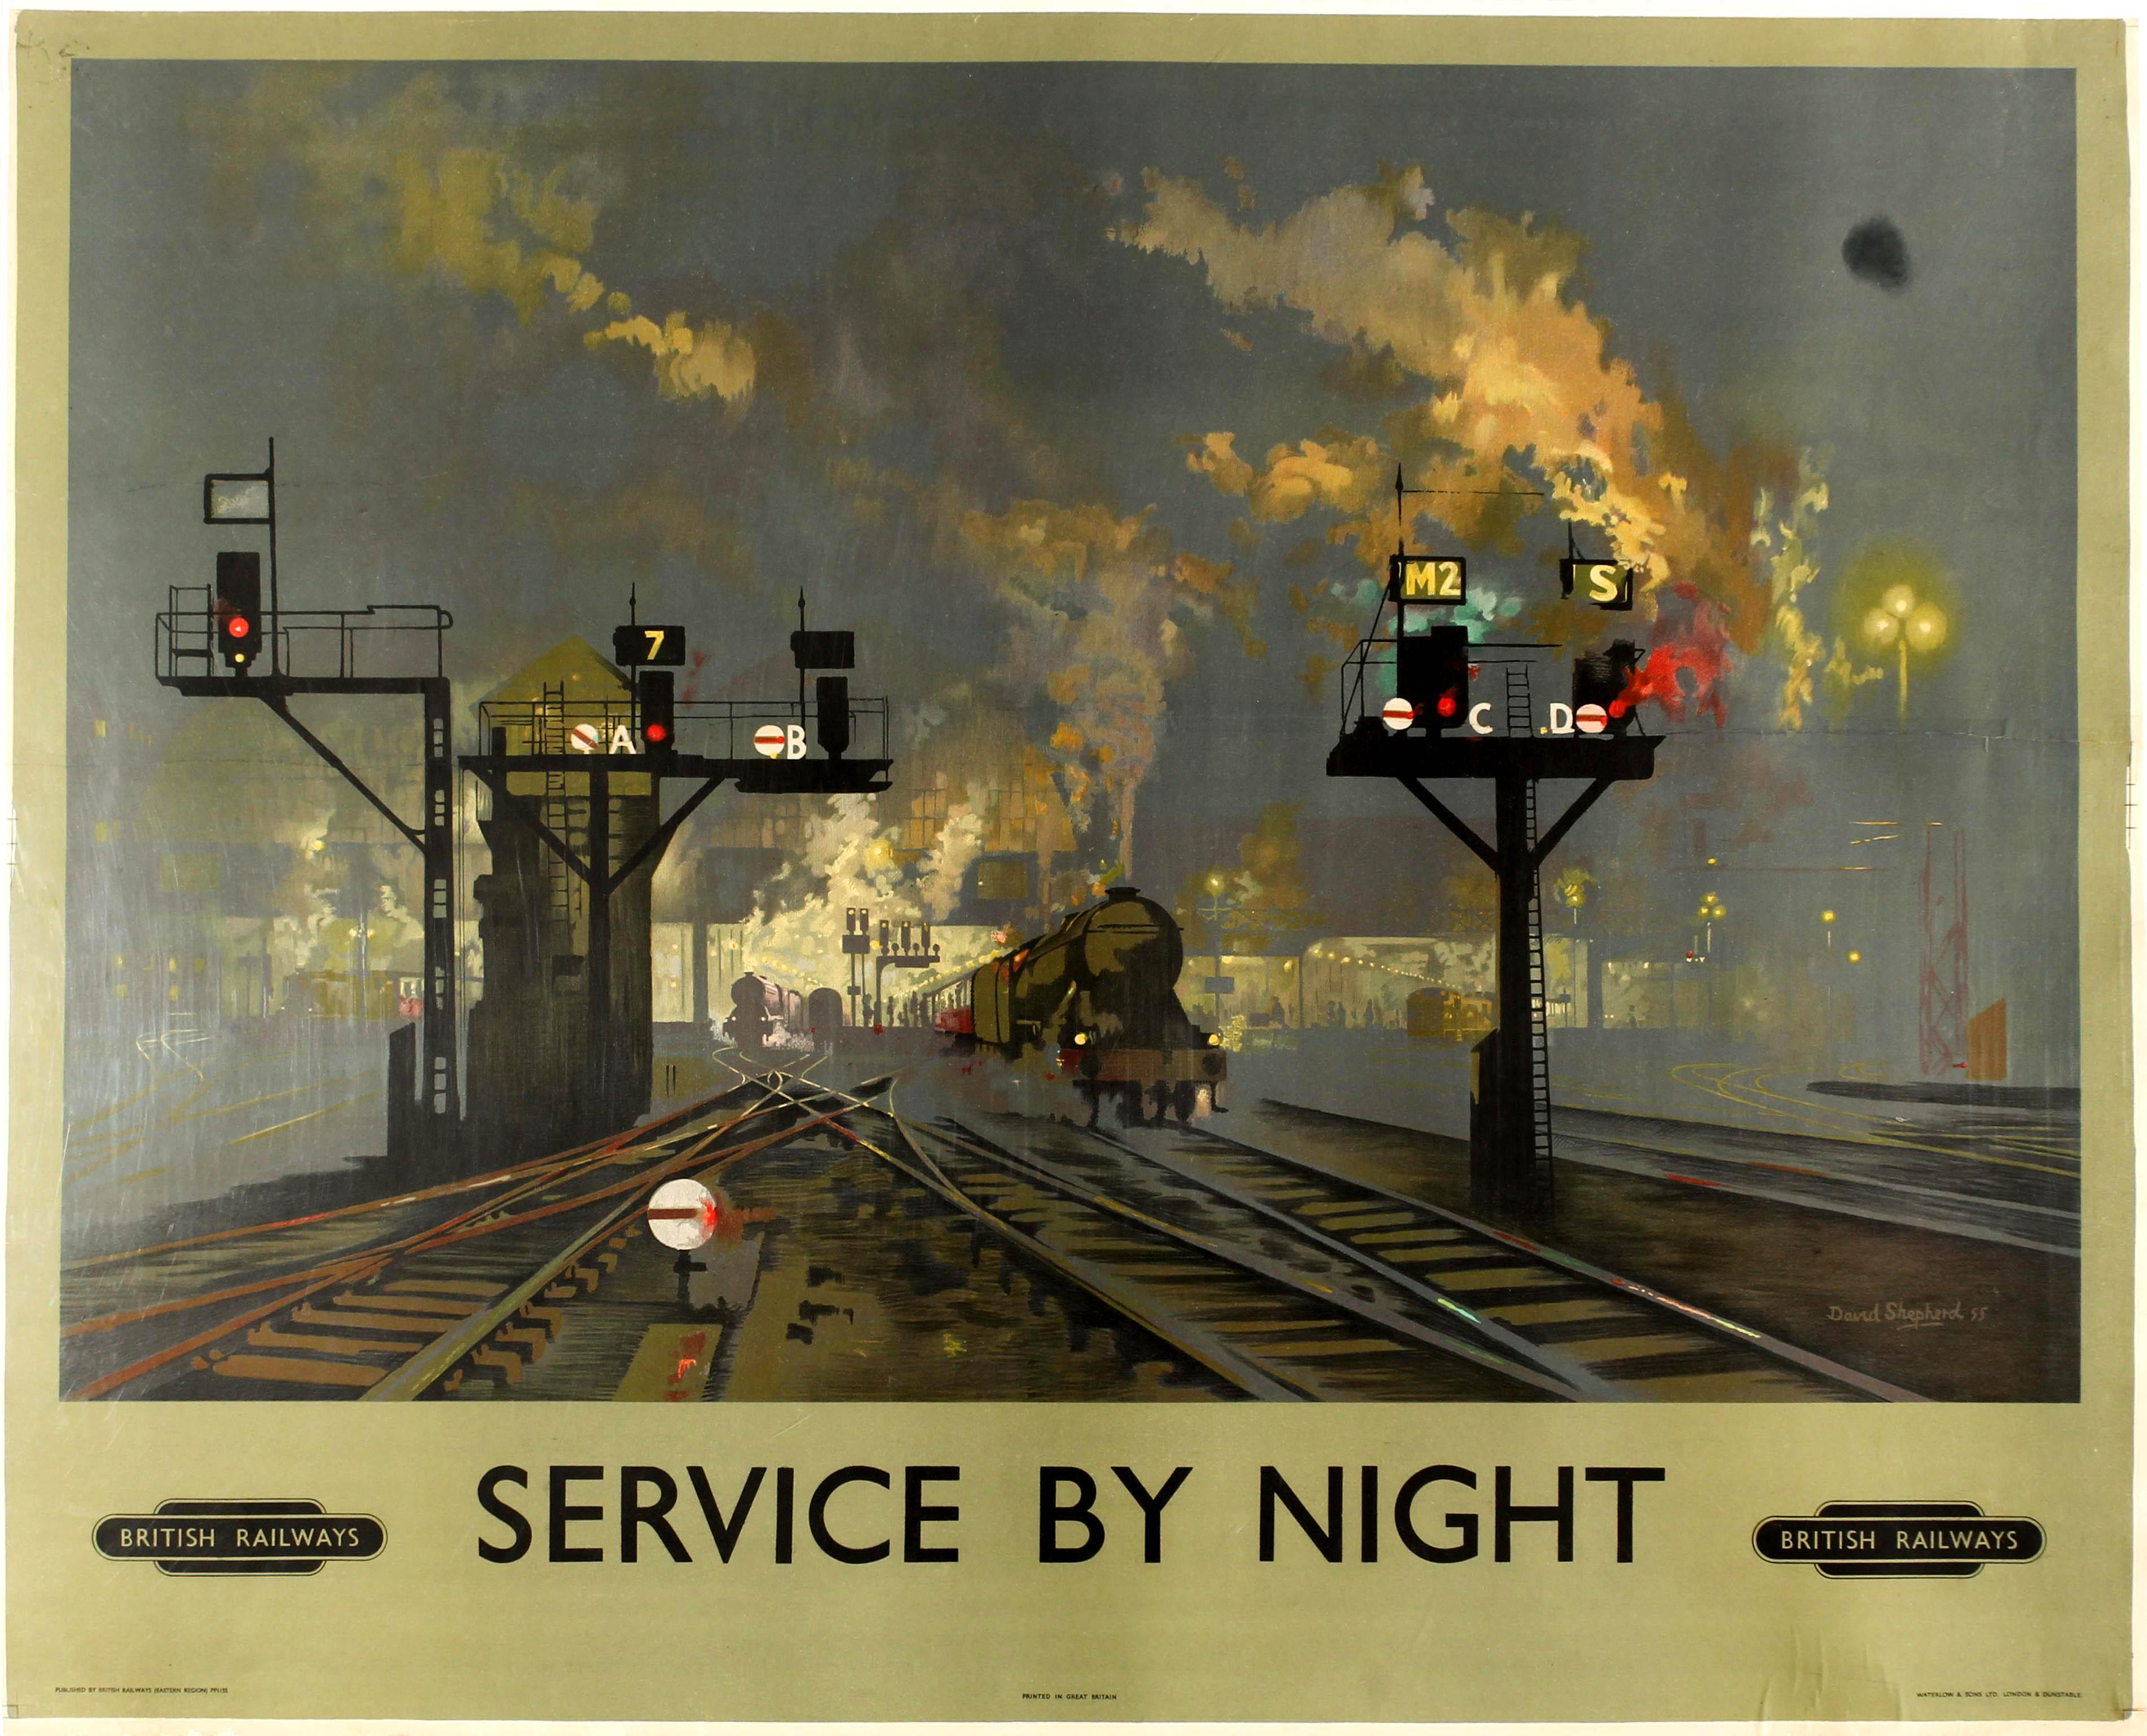 David Shepherd Print - Original Vintage British Railways Poster Service By Night - King's Cross London